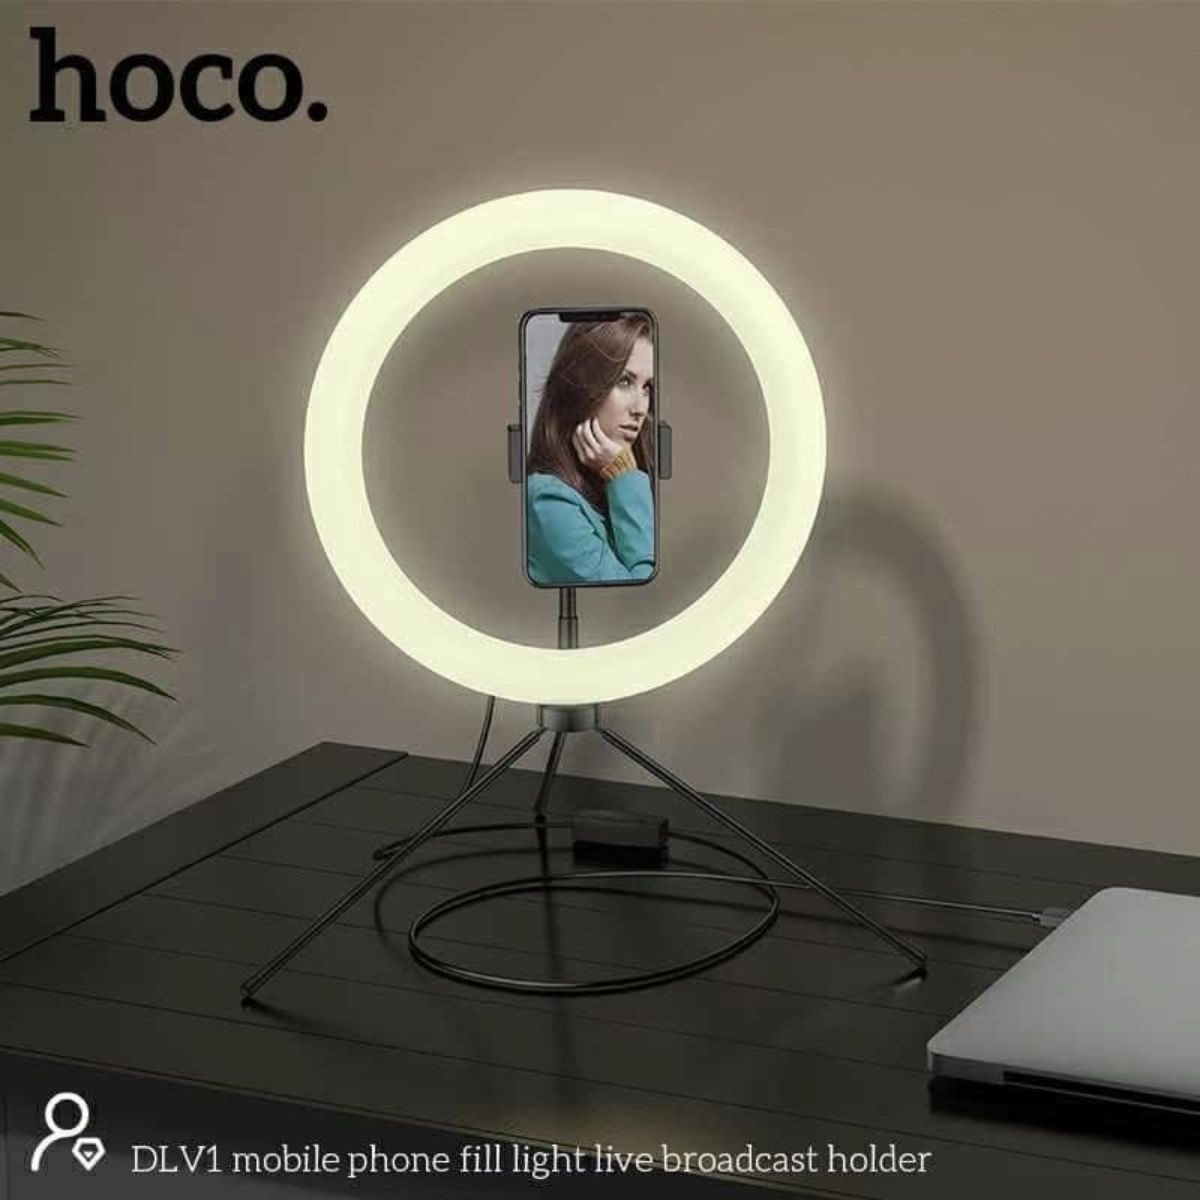 Hoco DLV1 Mobile Phone Fill Light Live Broadcast Holder - Black